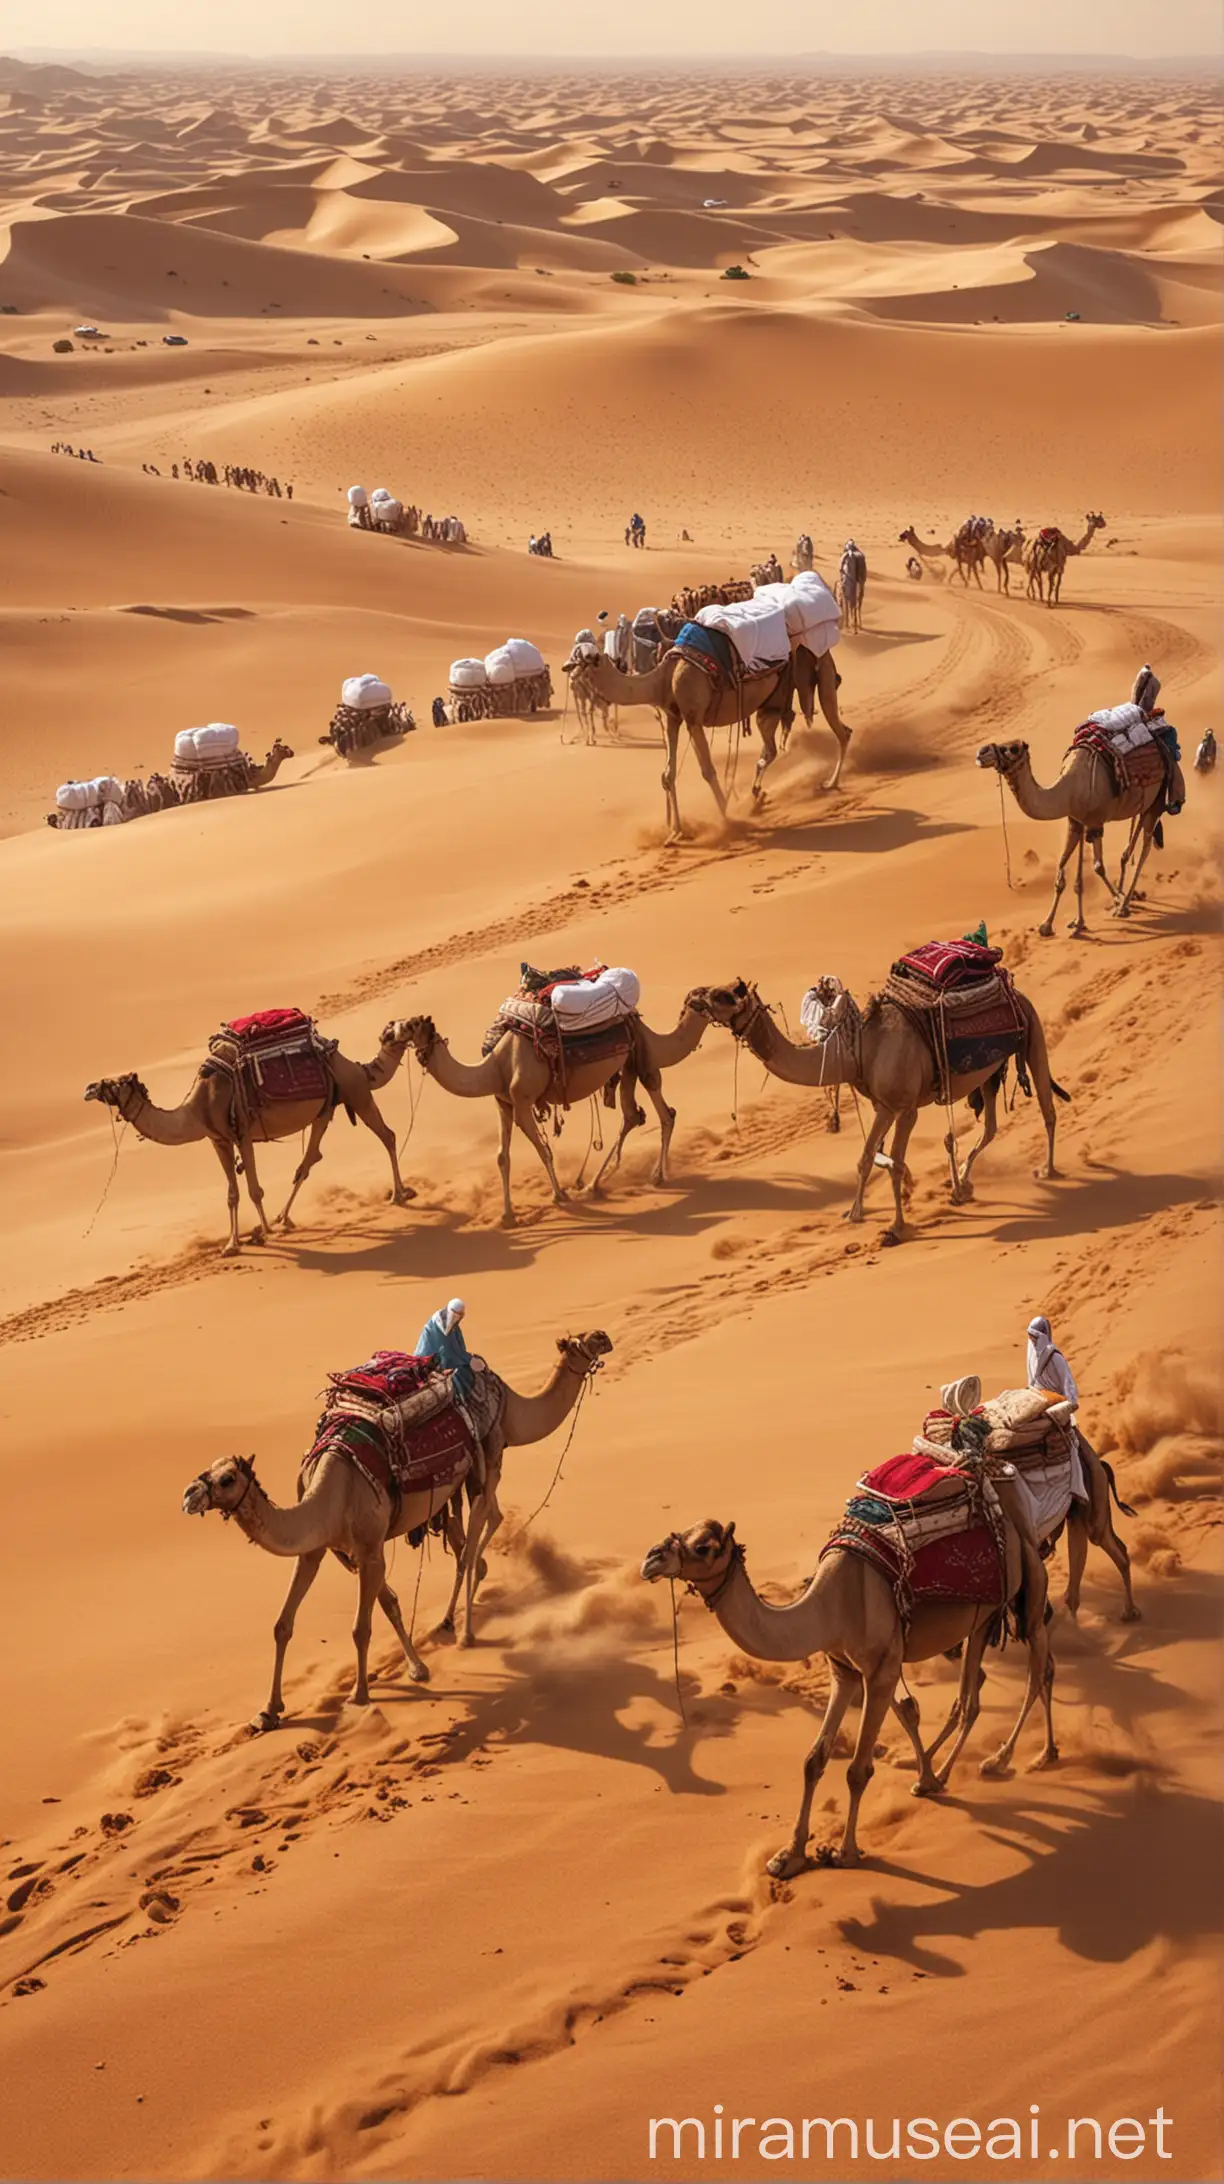 Ancient Trade Caravans Crossing Arabian Deserts Symbolizing Spice Routes